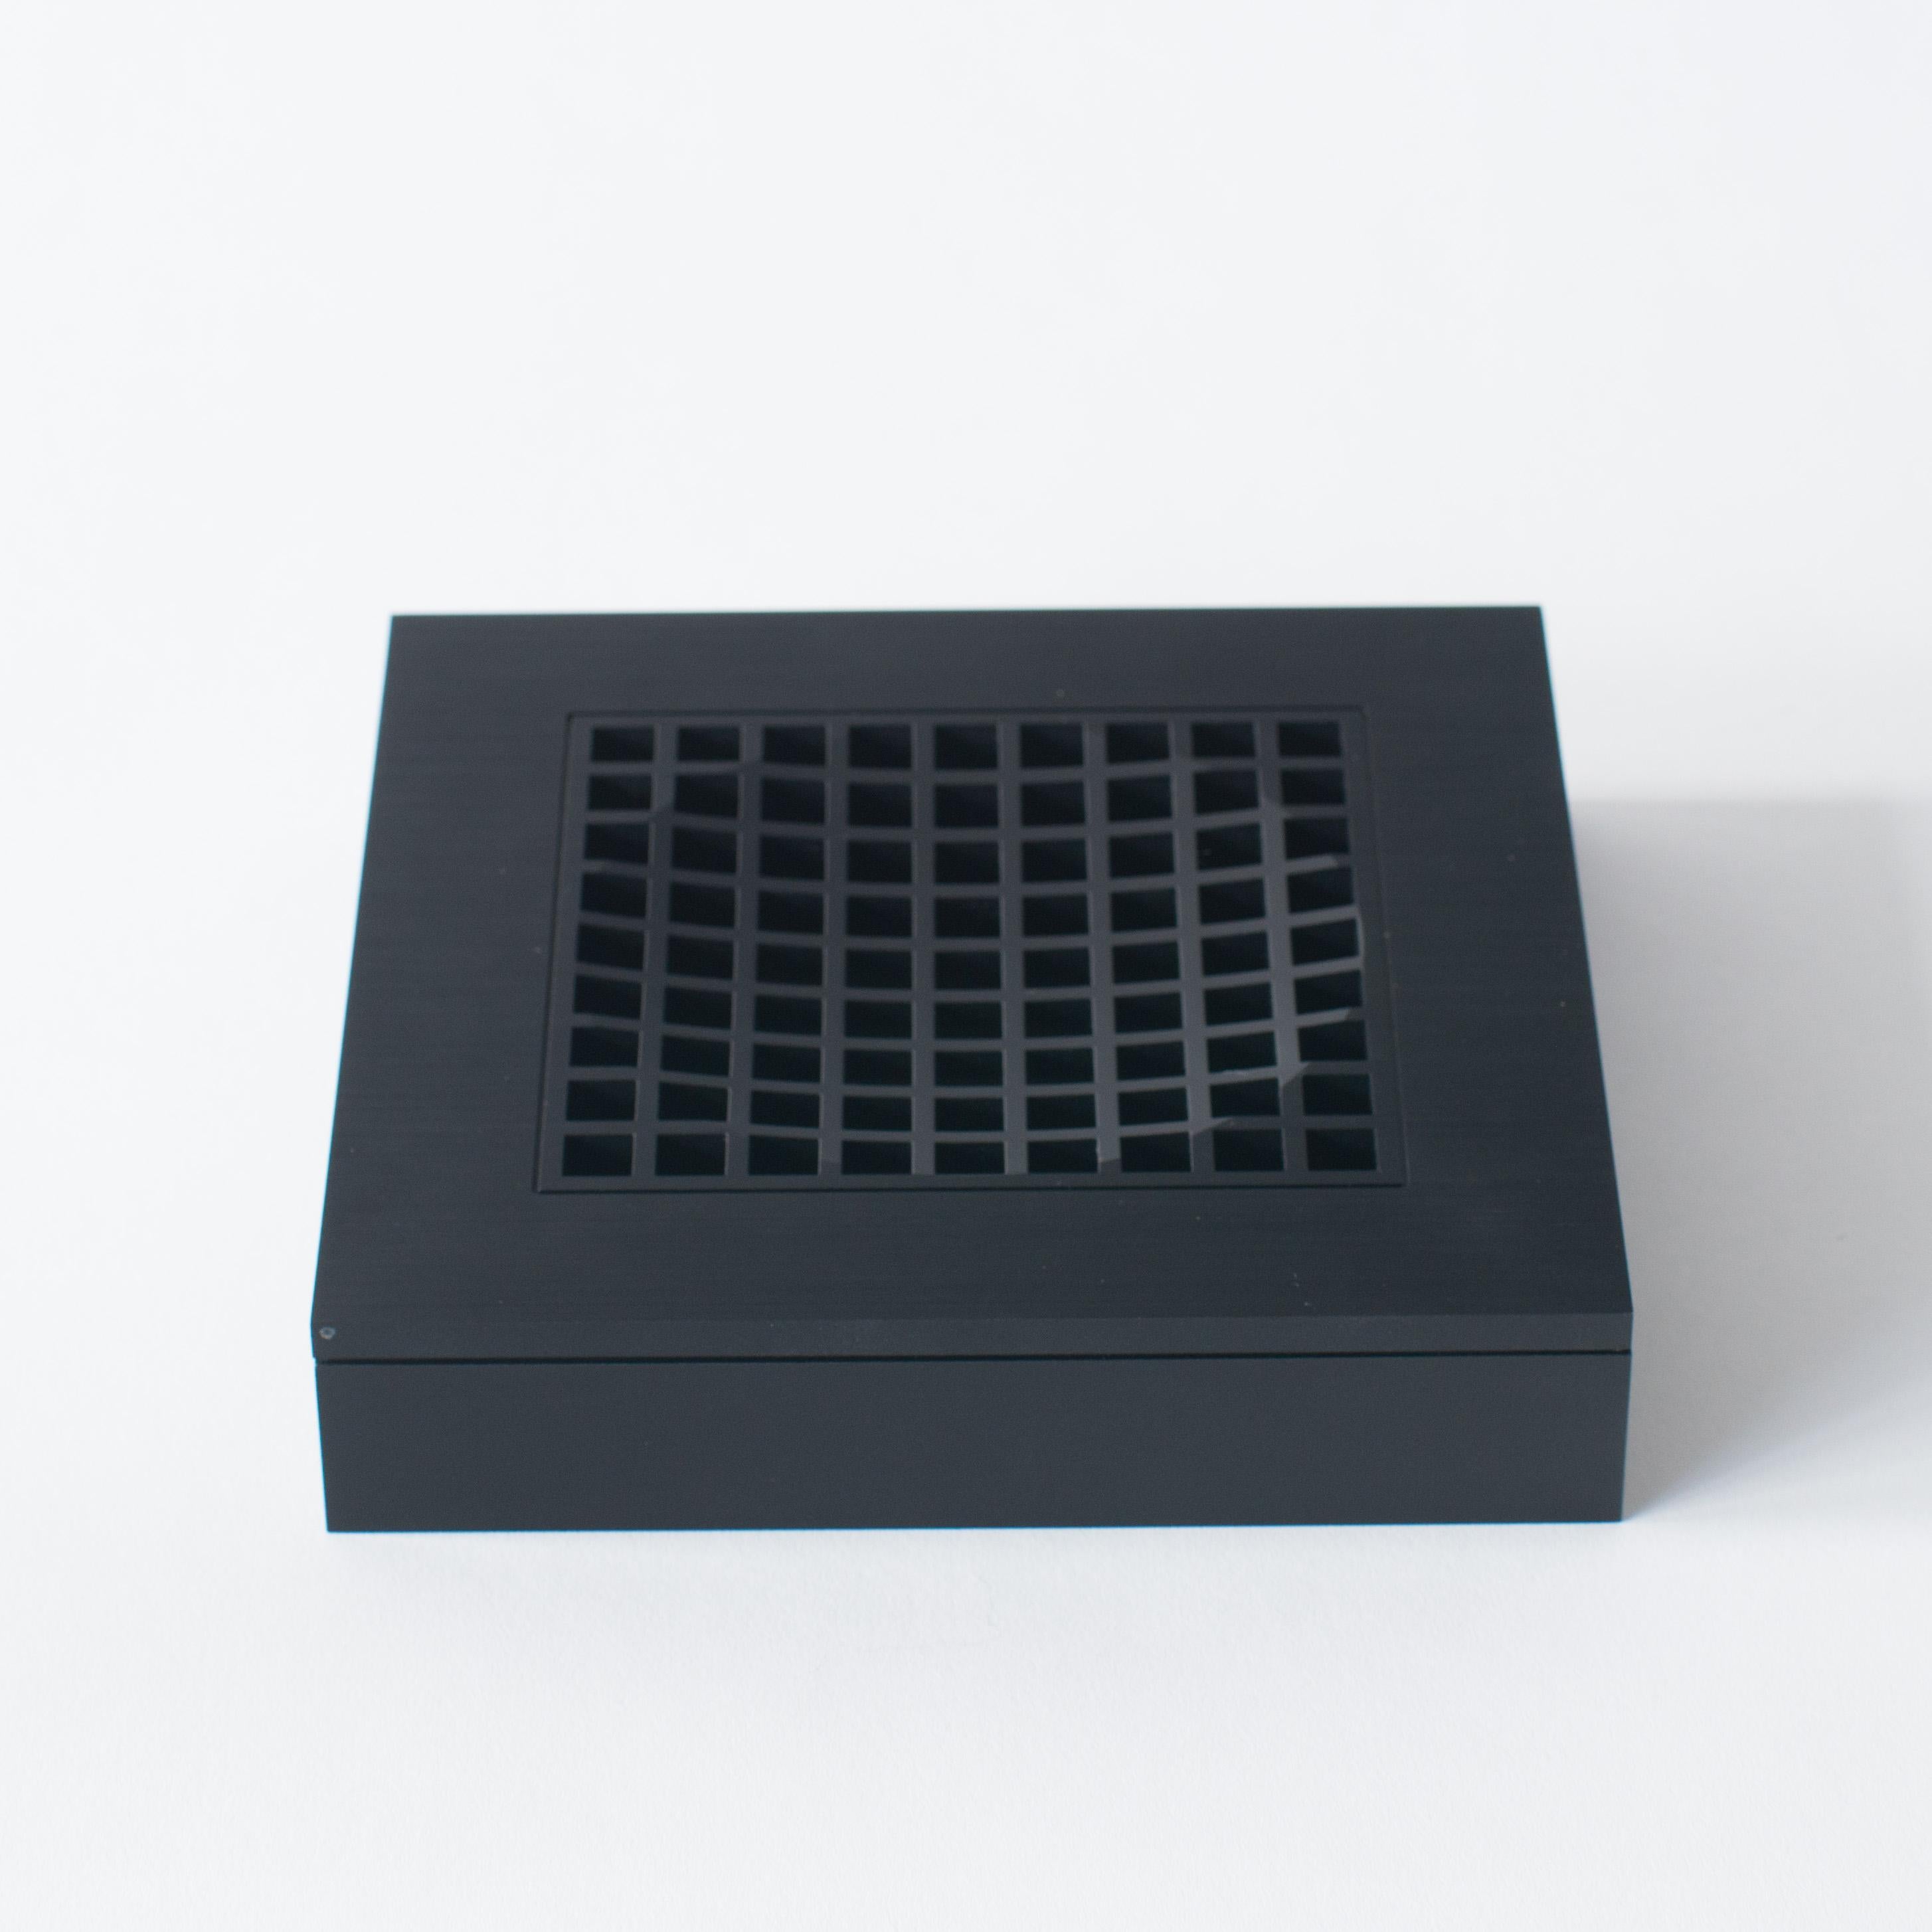 Shiro Kuramata's ashtray1. Made of black aluminum.
Rather optical art object than usual astray. 


  
  